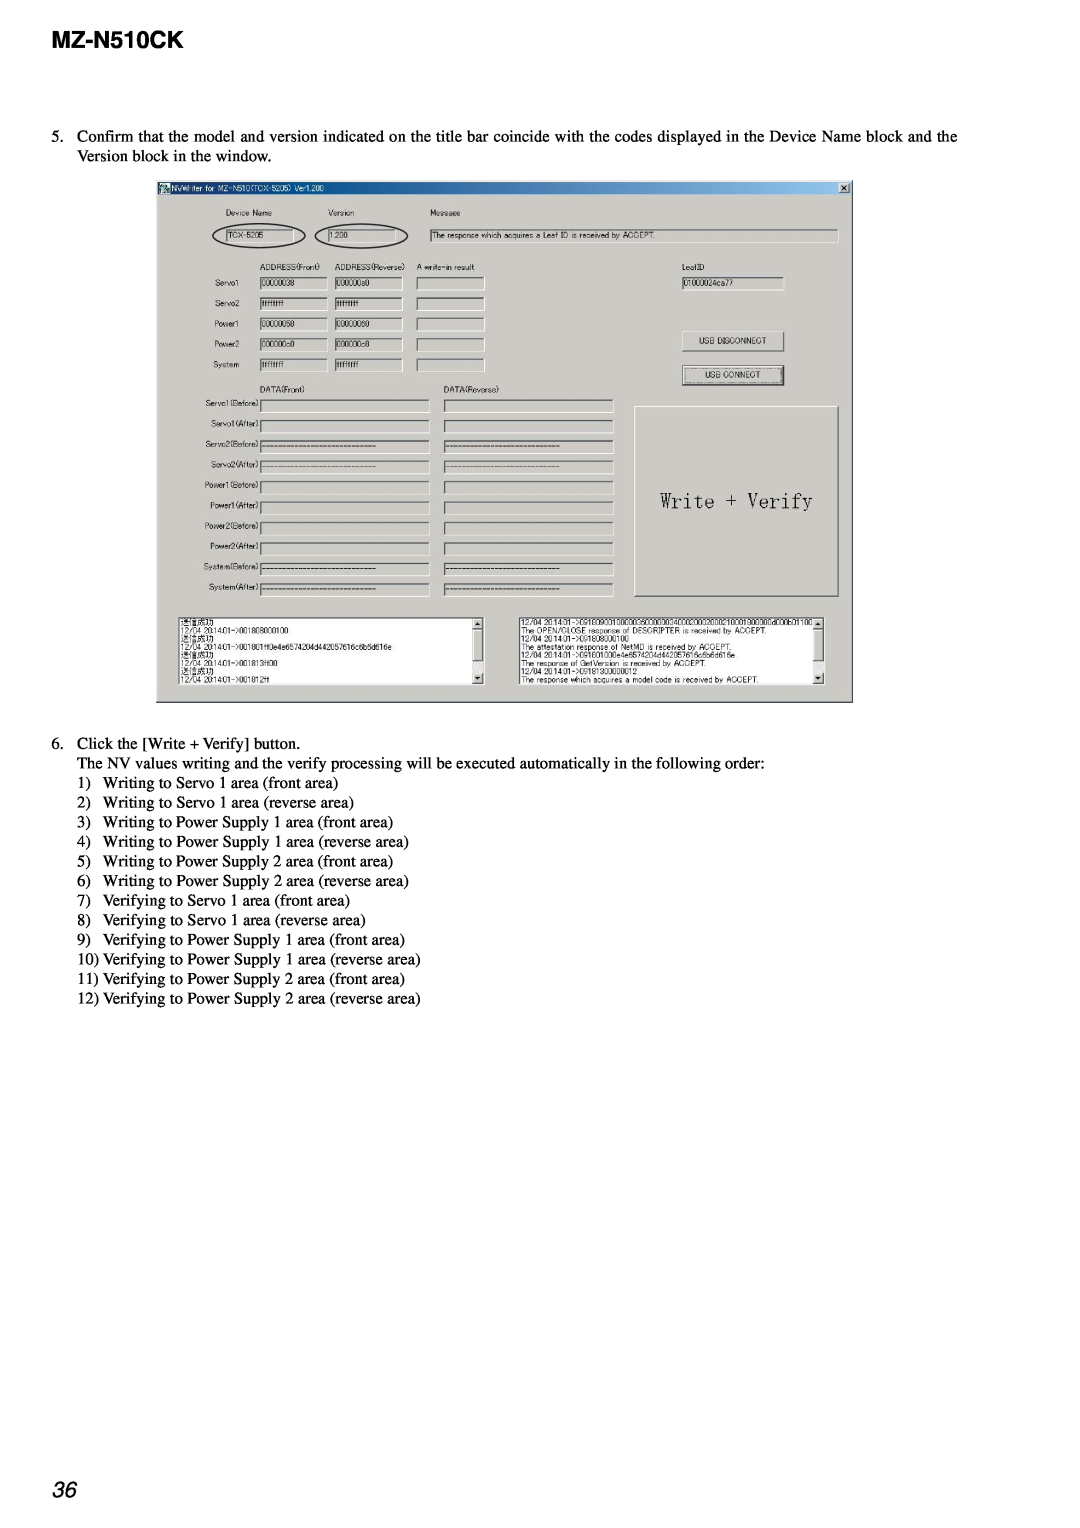 Sony MZ-N510CK service manual Click the Write + Verify button 